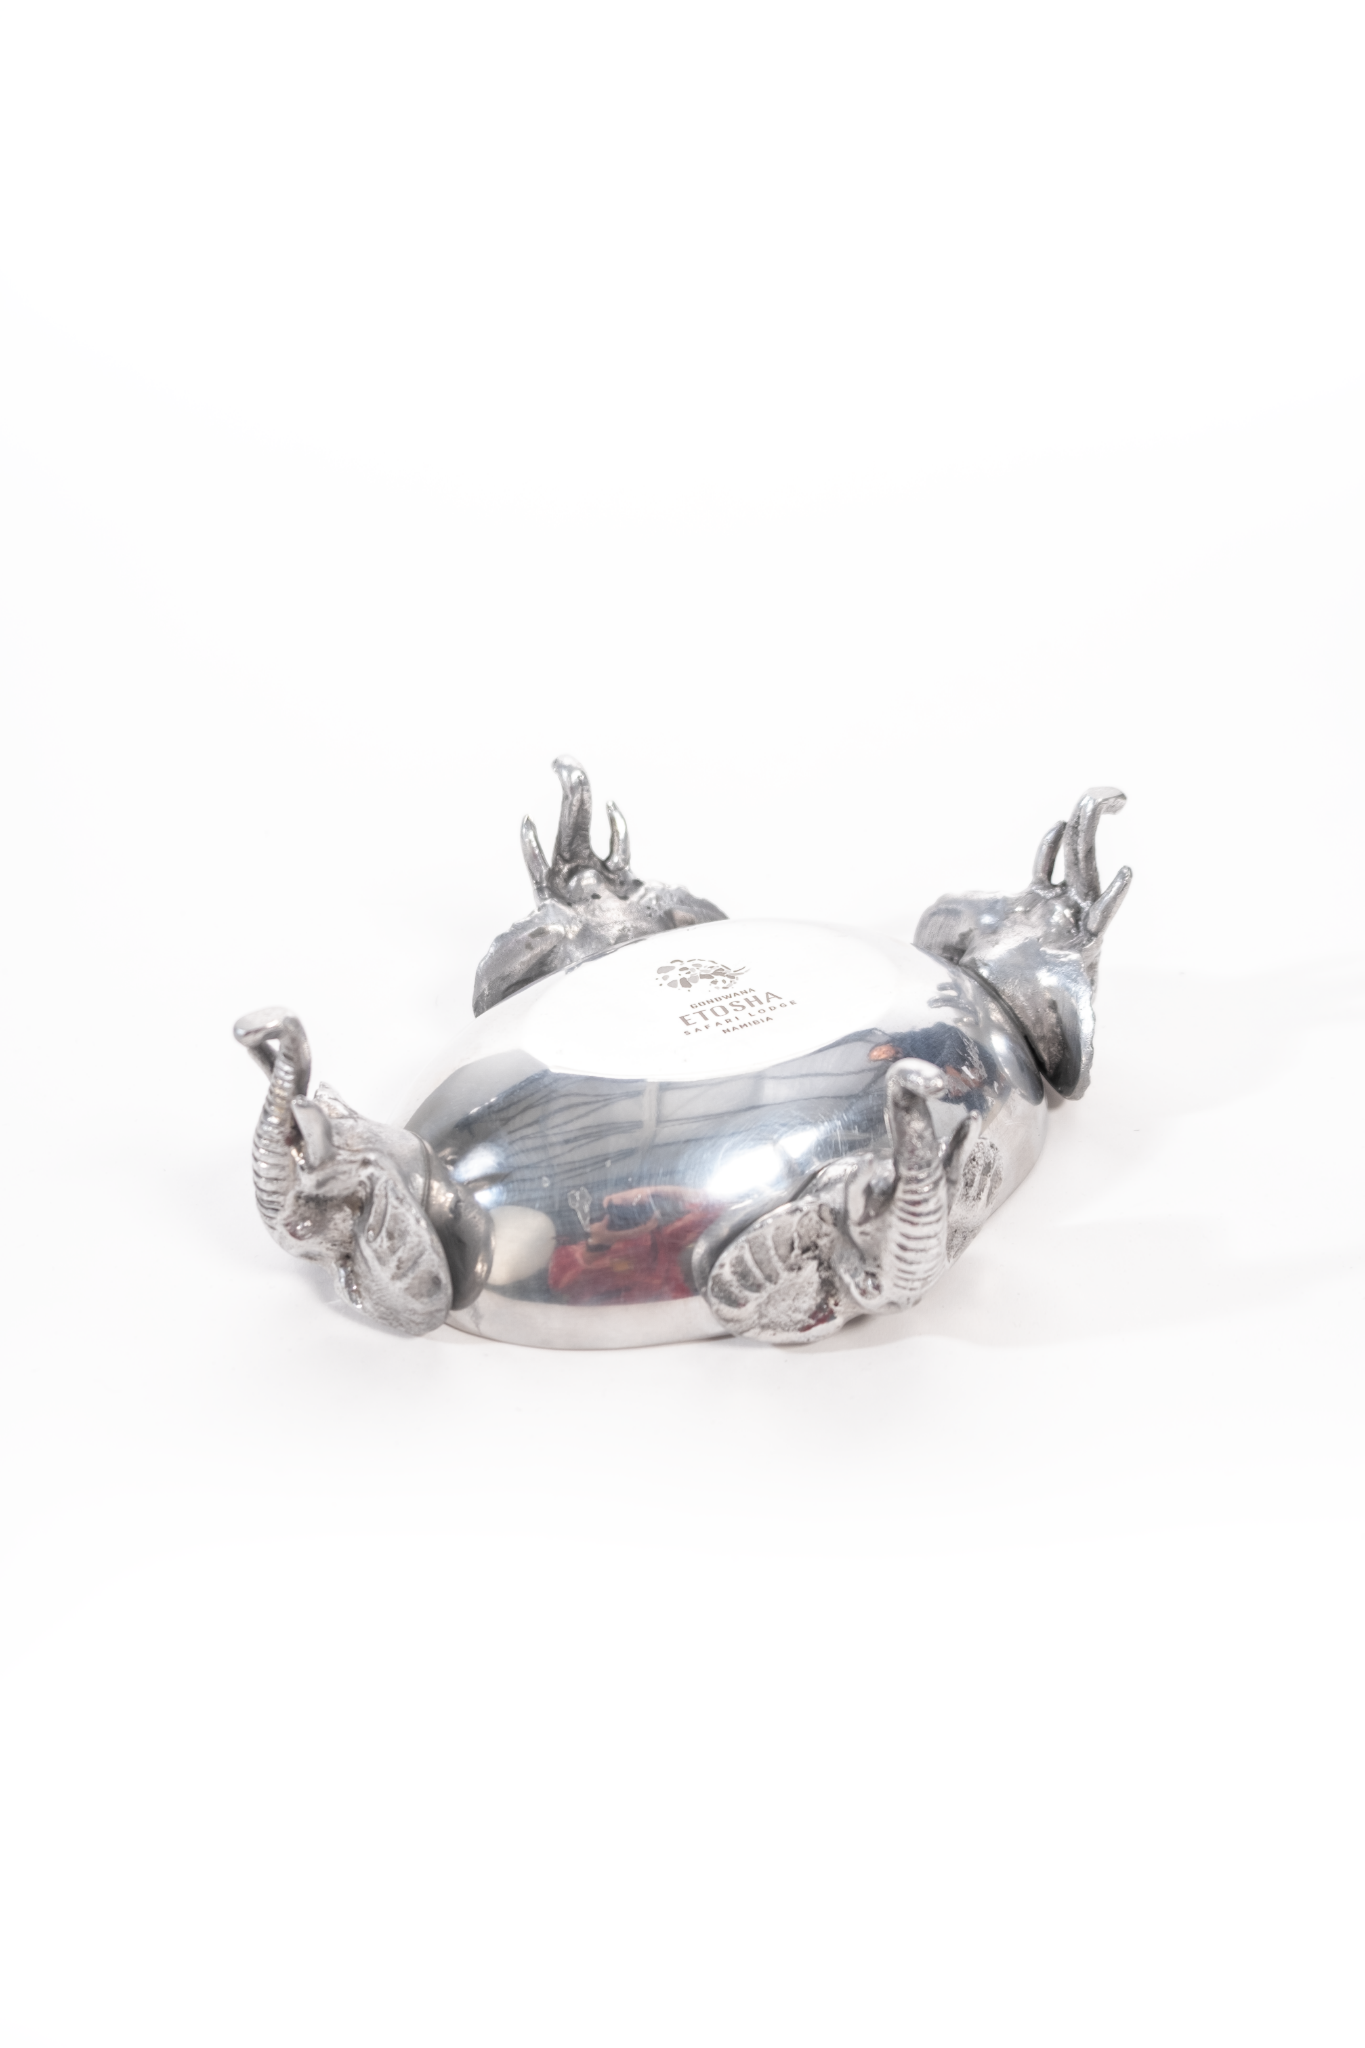 Aluminium Elephant oval bowl